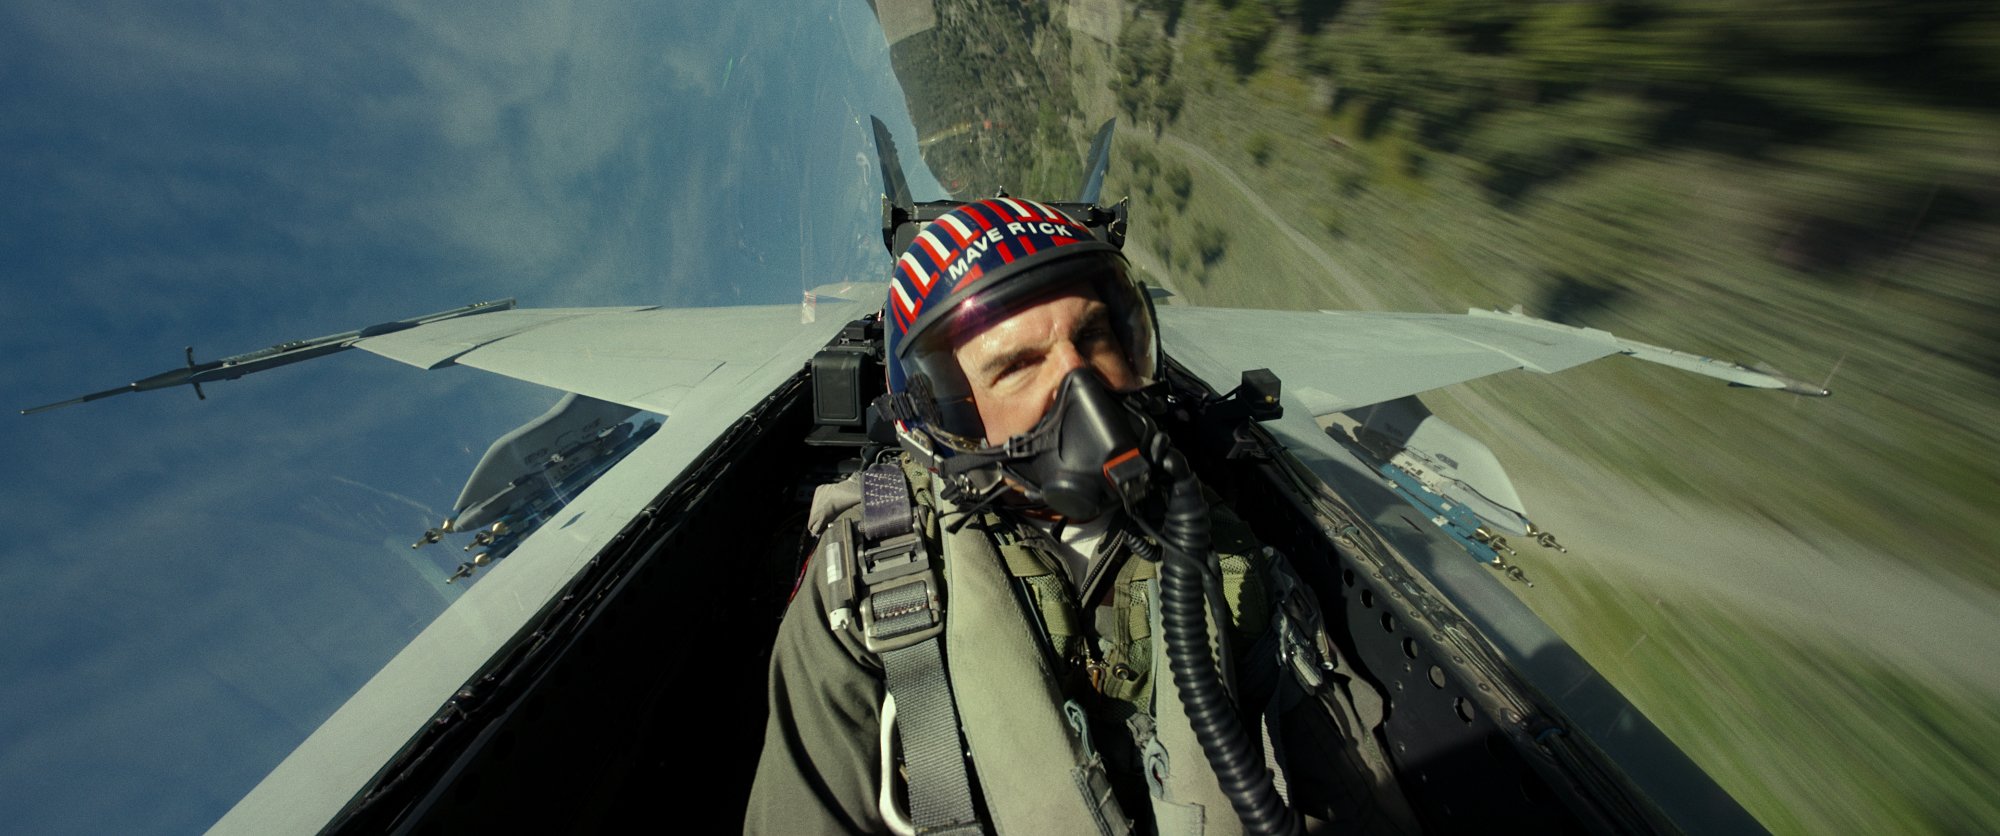 Tom Cruise as Maverick flying an aircraft in a scene from Top Gun: Maverick